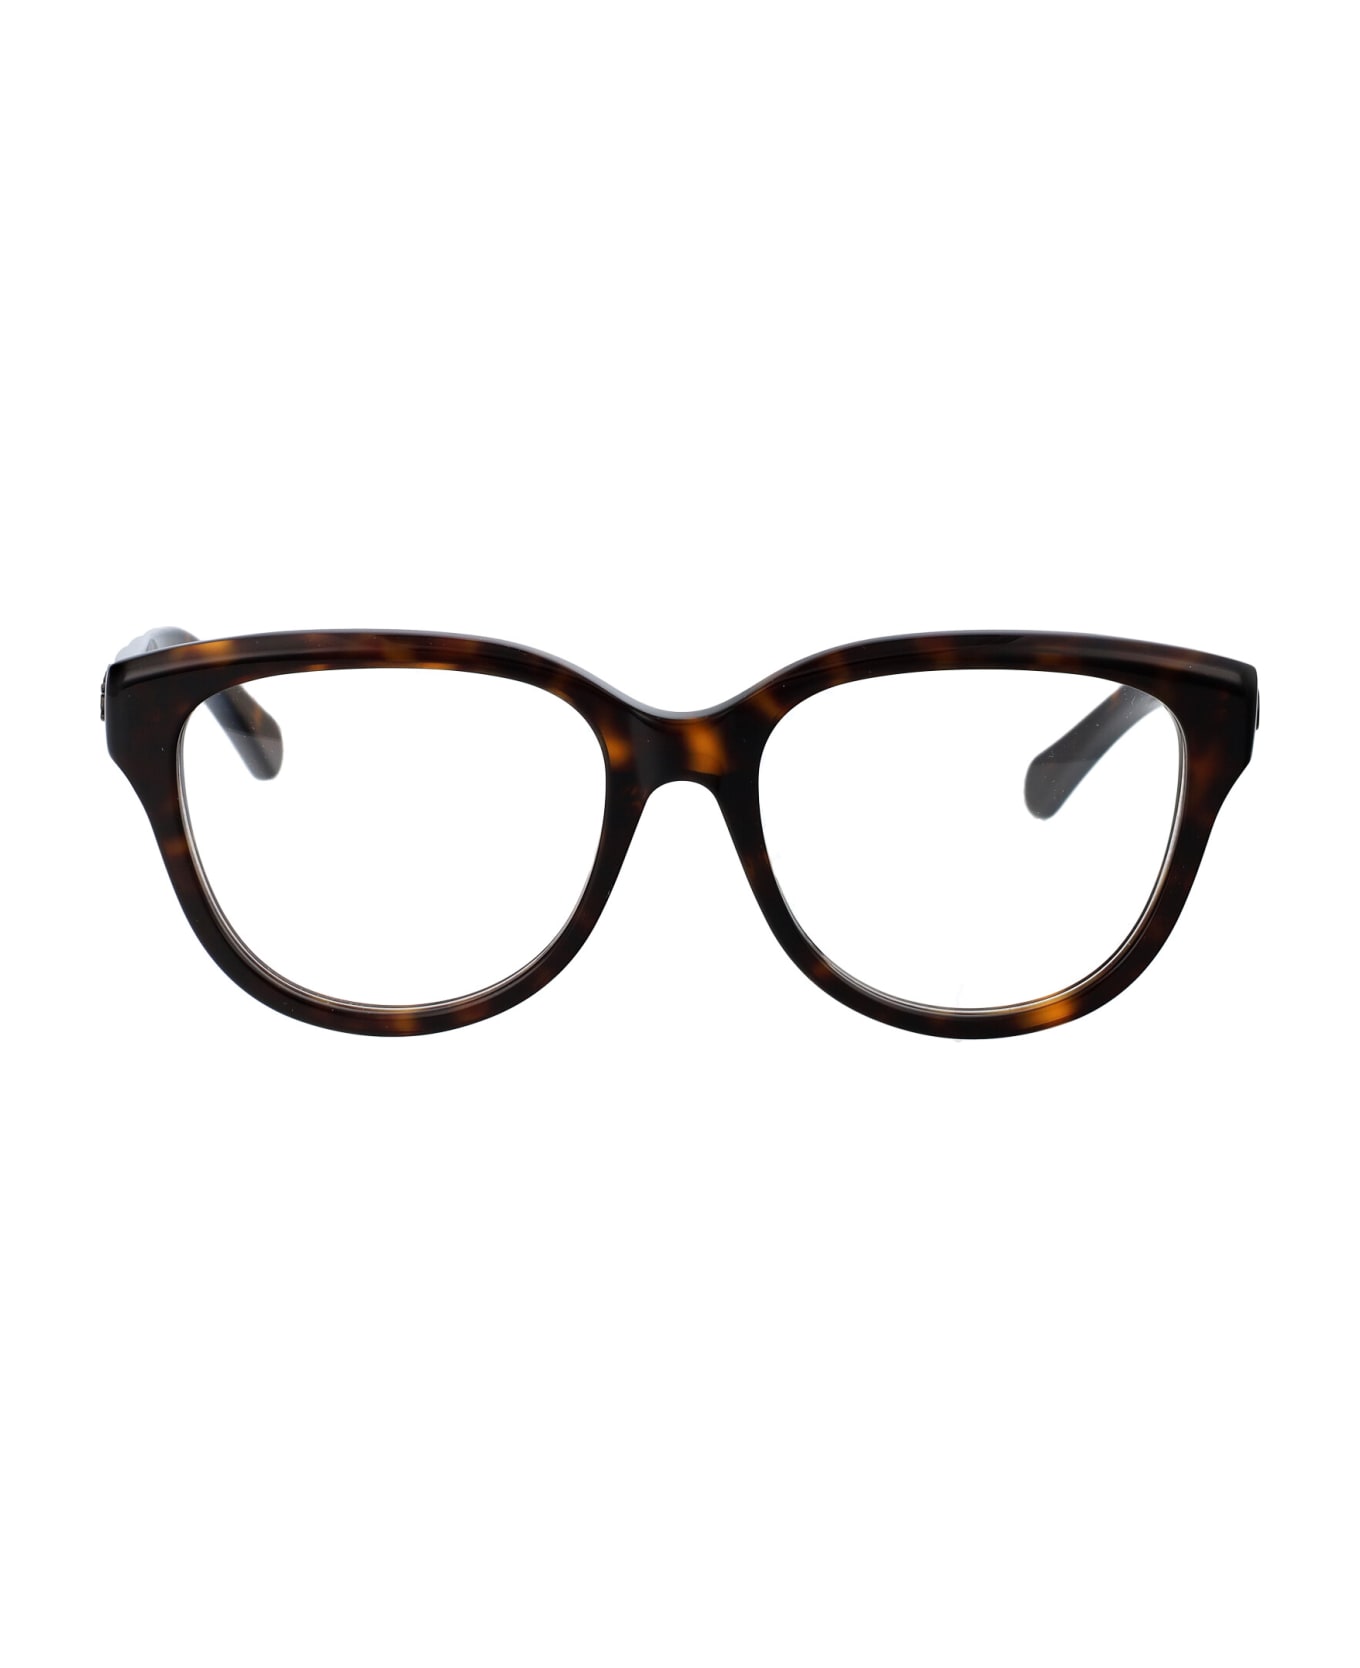 Chloé Eyewear Ch0243o Glasses - 006 HAVANA HAVANA TRANSPARENT アイウェア